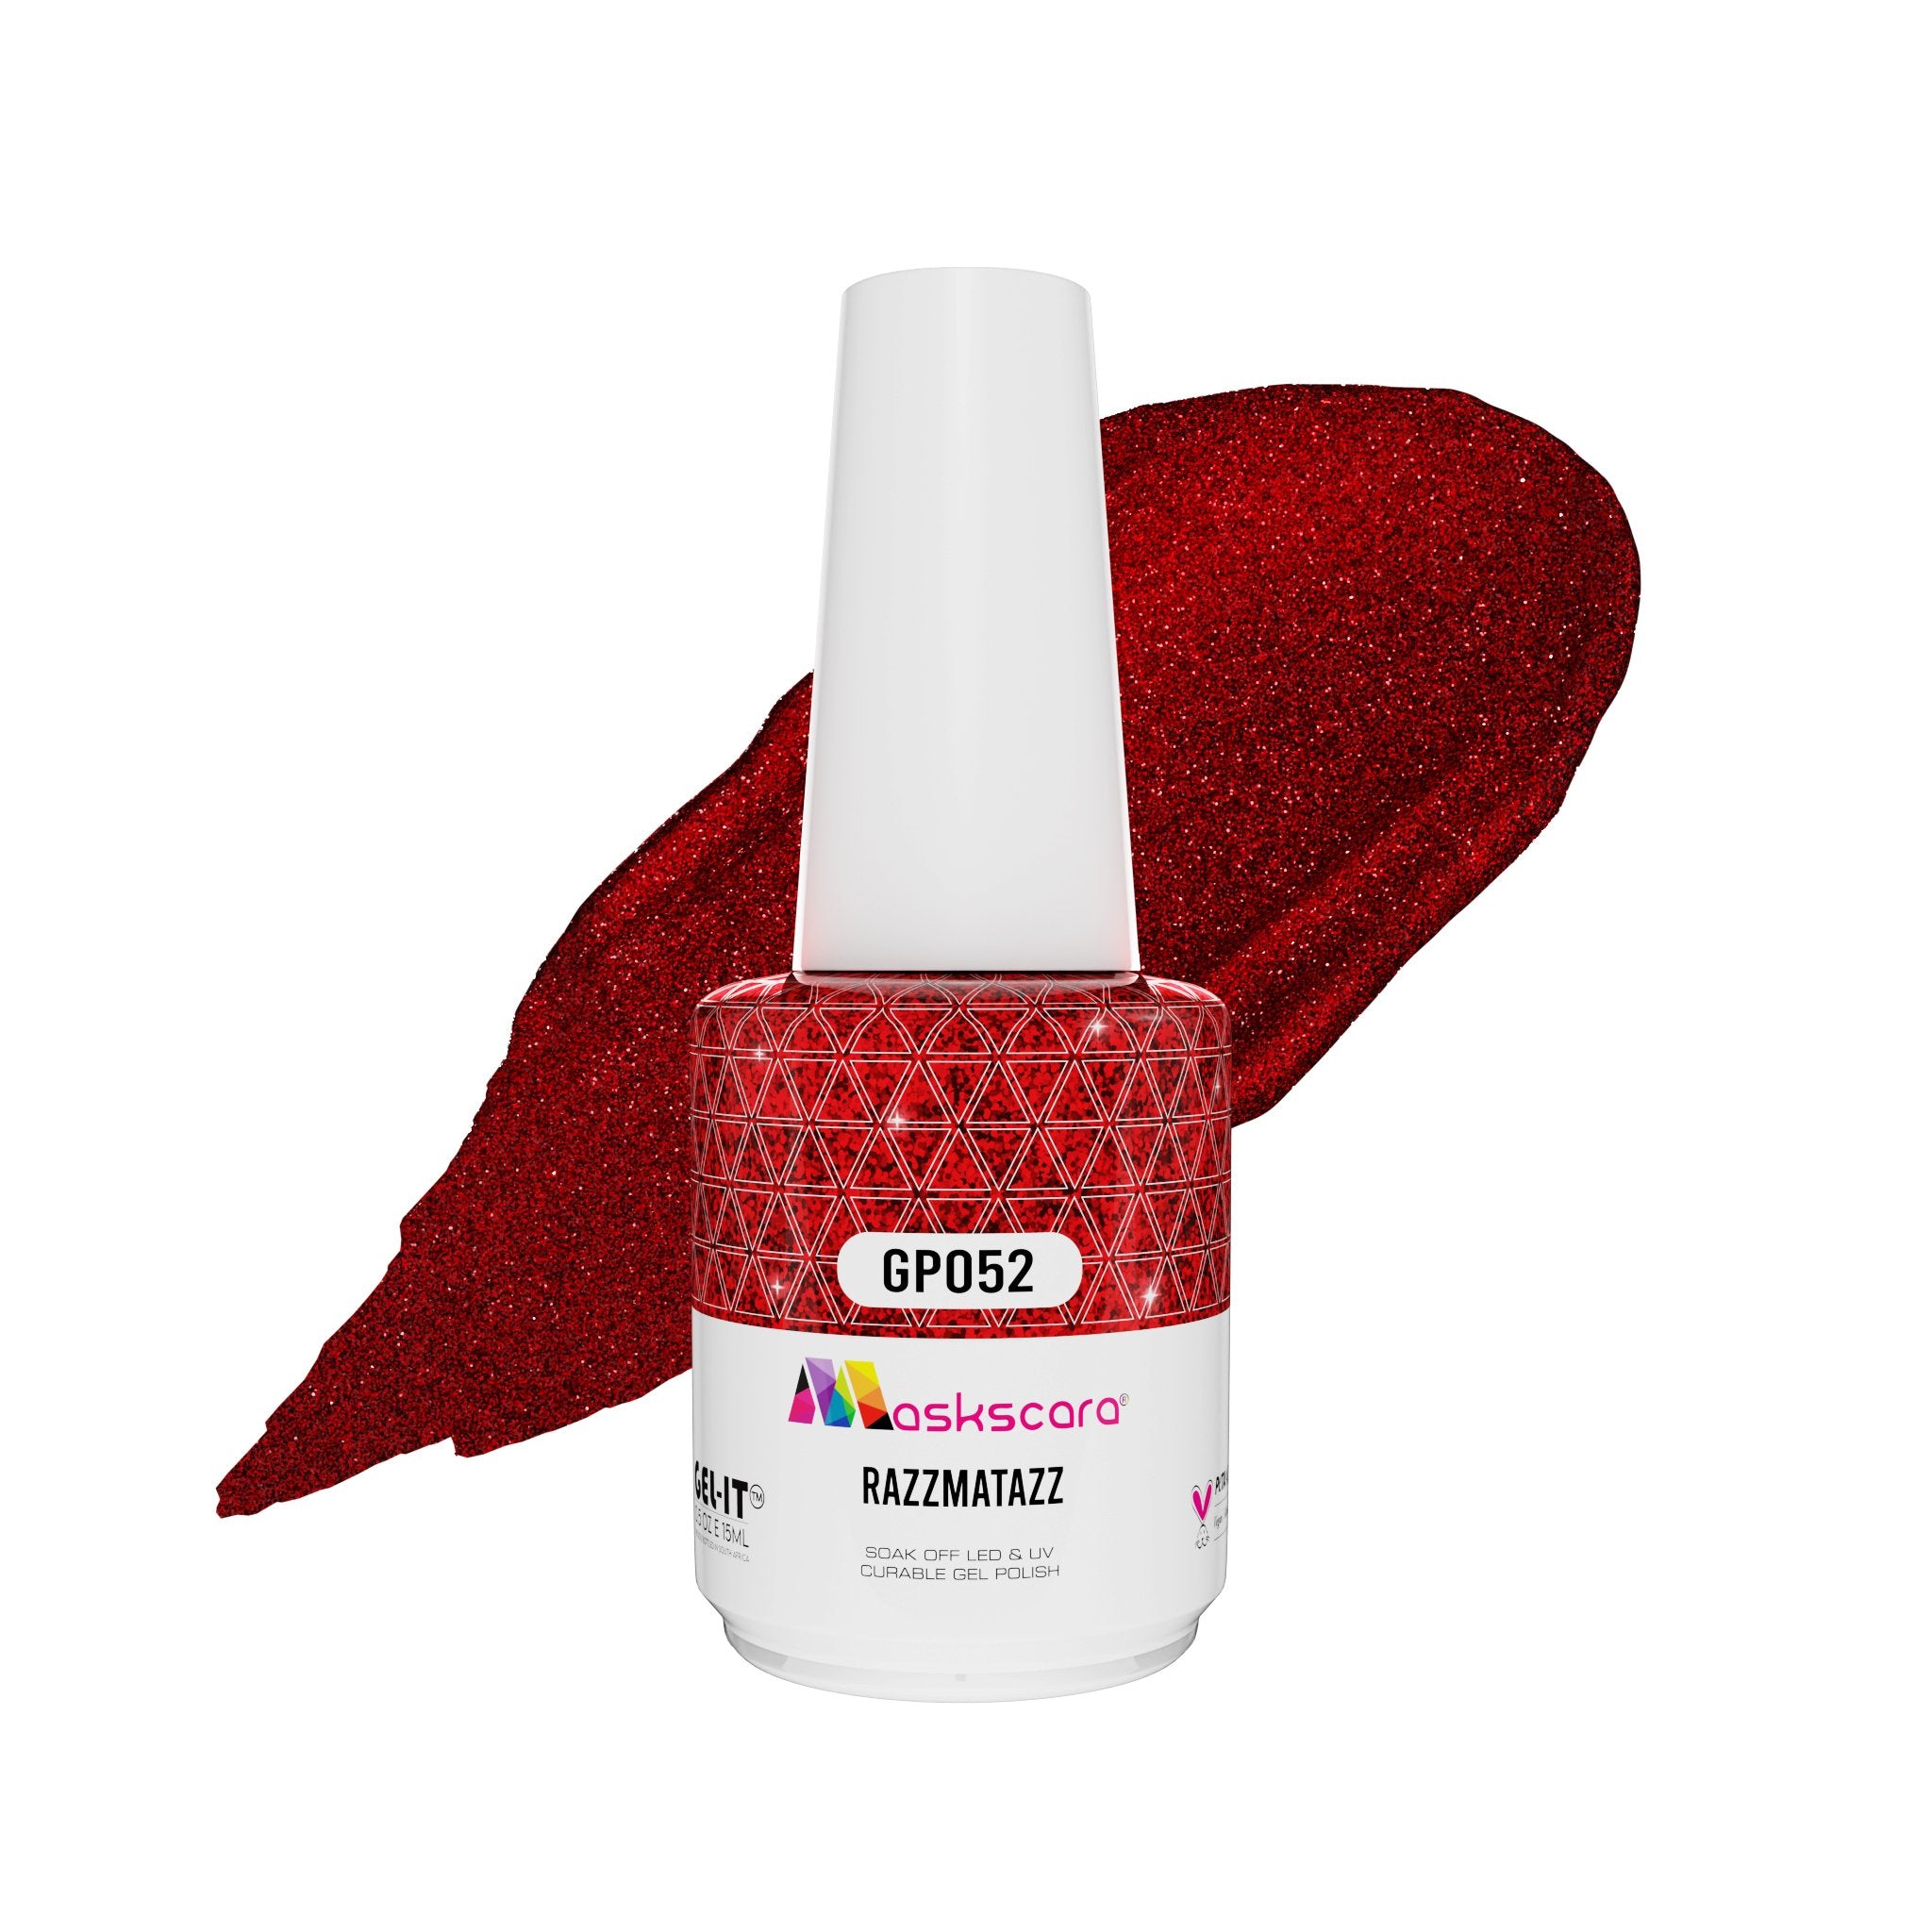 <img scr = “ GP052 Razzmatazz.jpeg” alt = “Red Berry Shimmer gel polish colour by the brand Maskscara”>